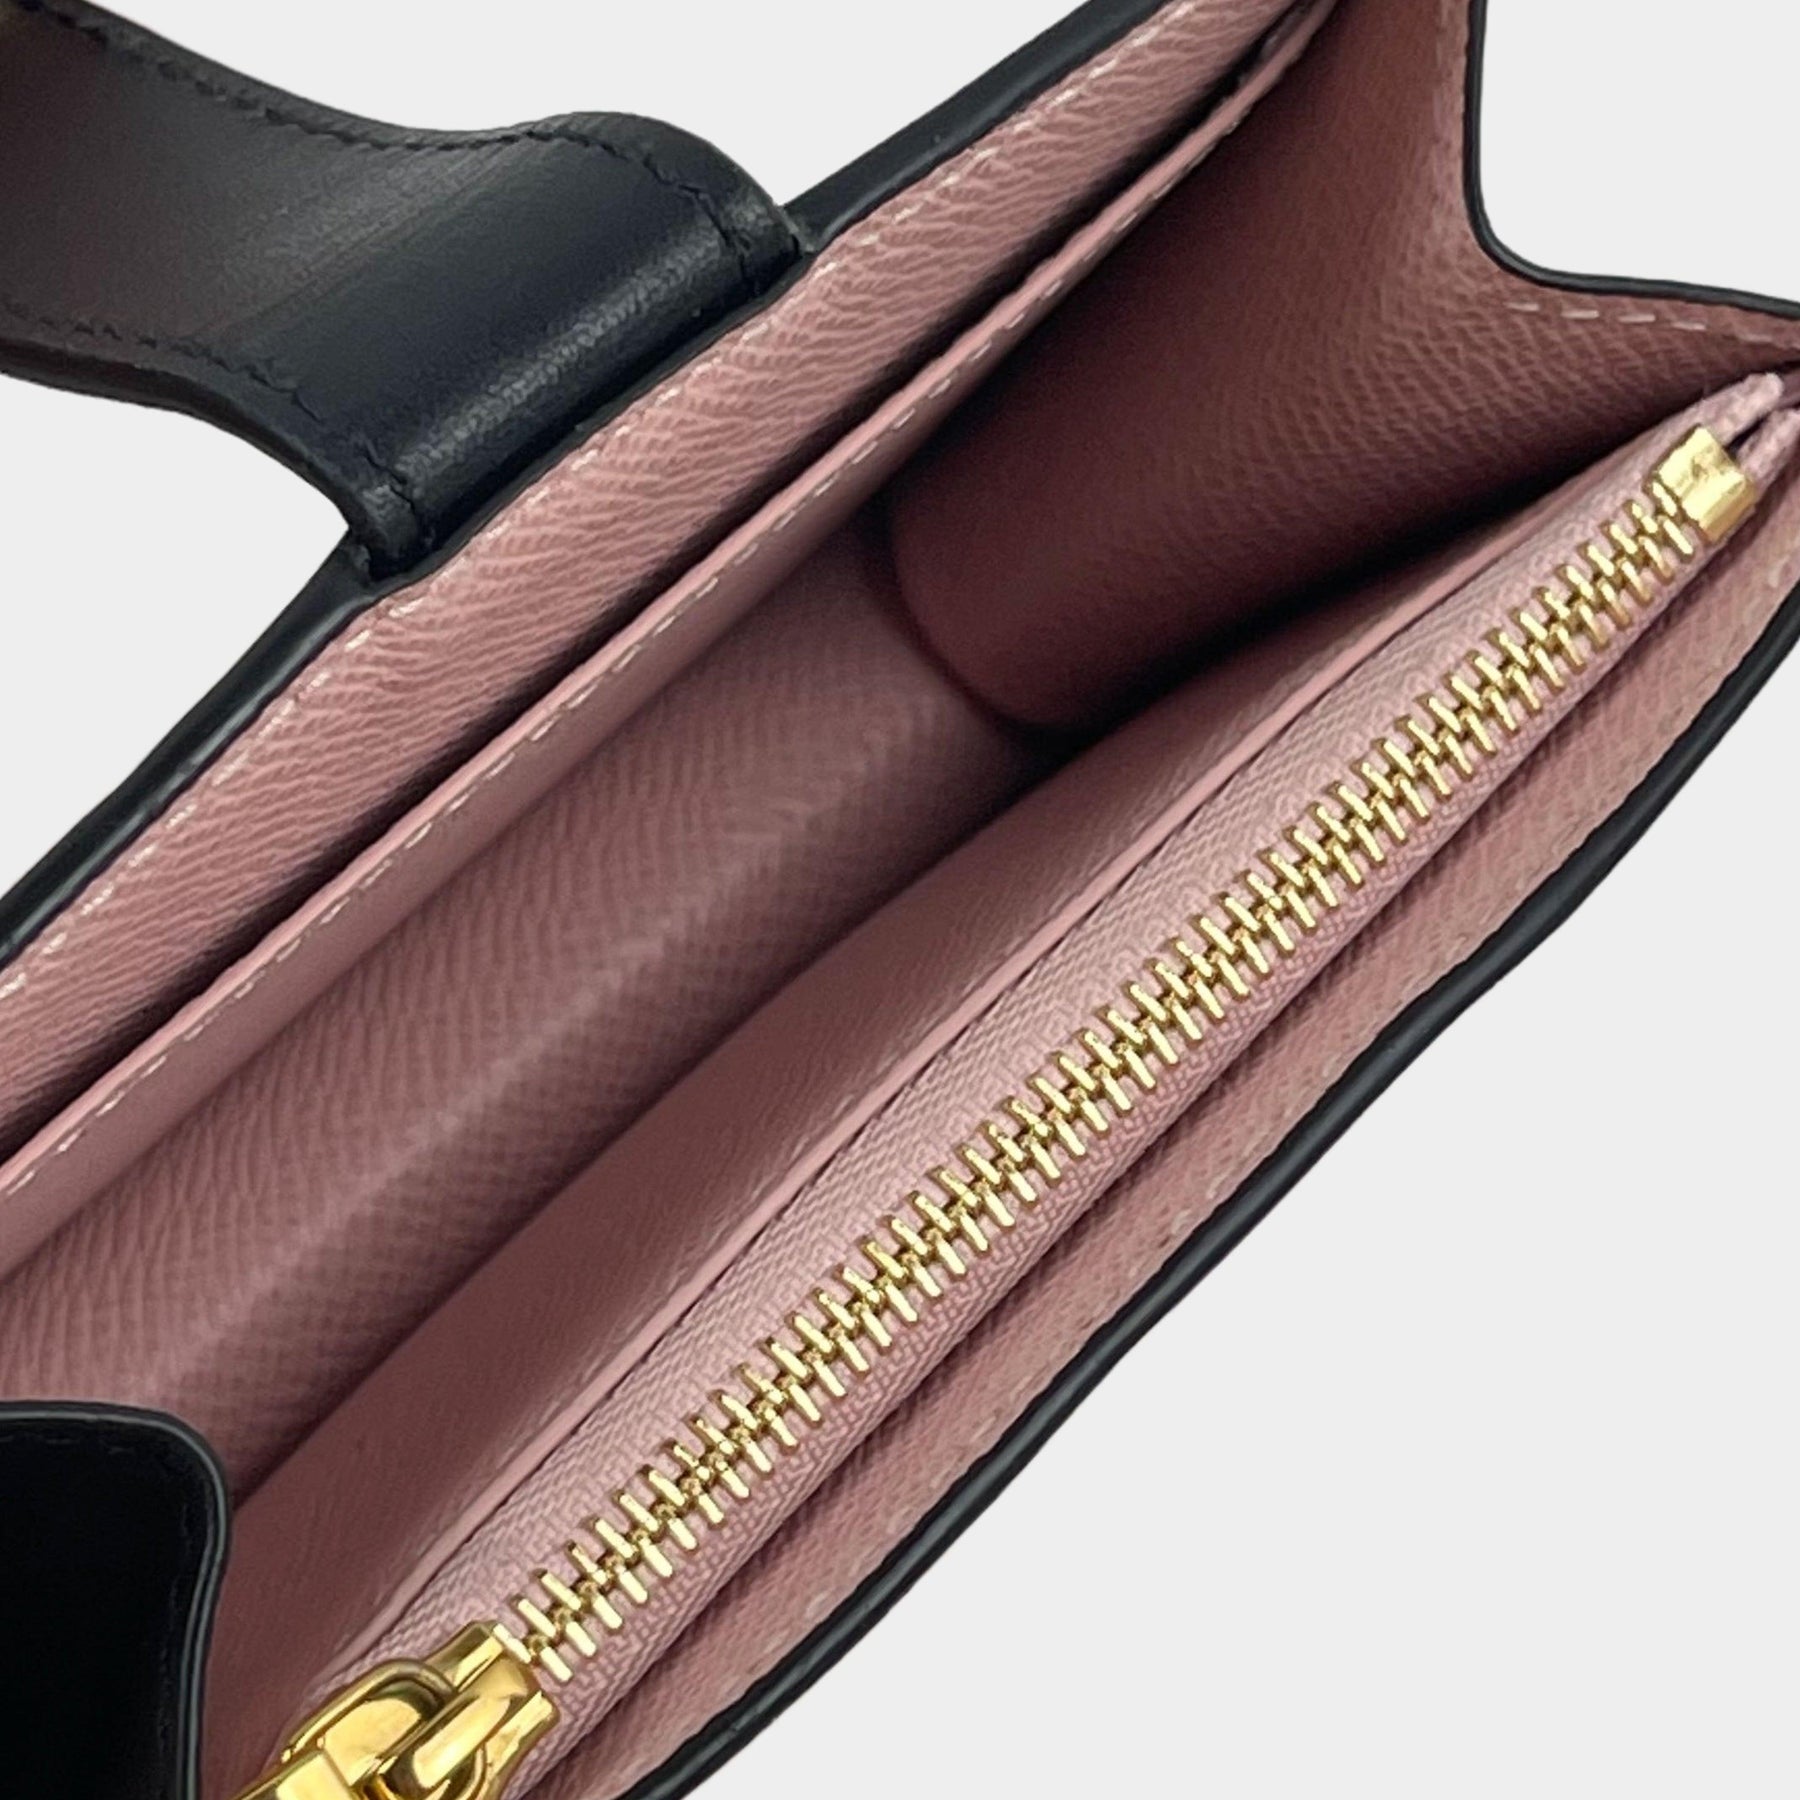 Louis Vuitton Trunk Multicartes Bag